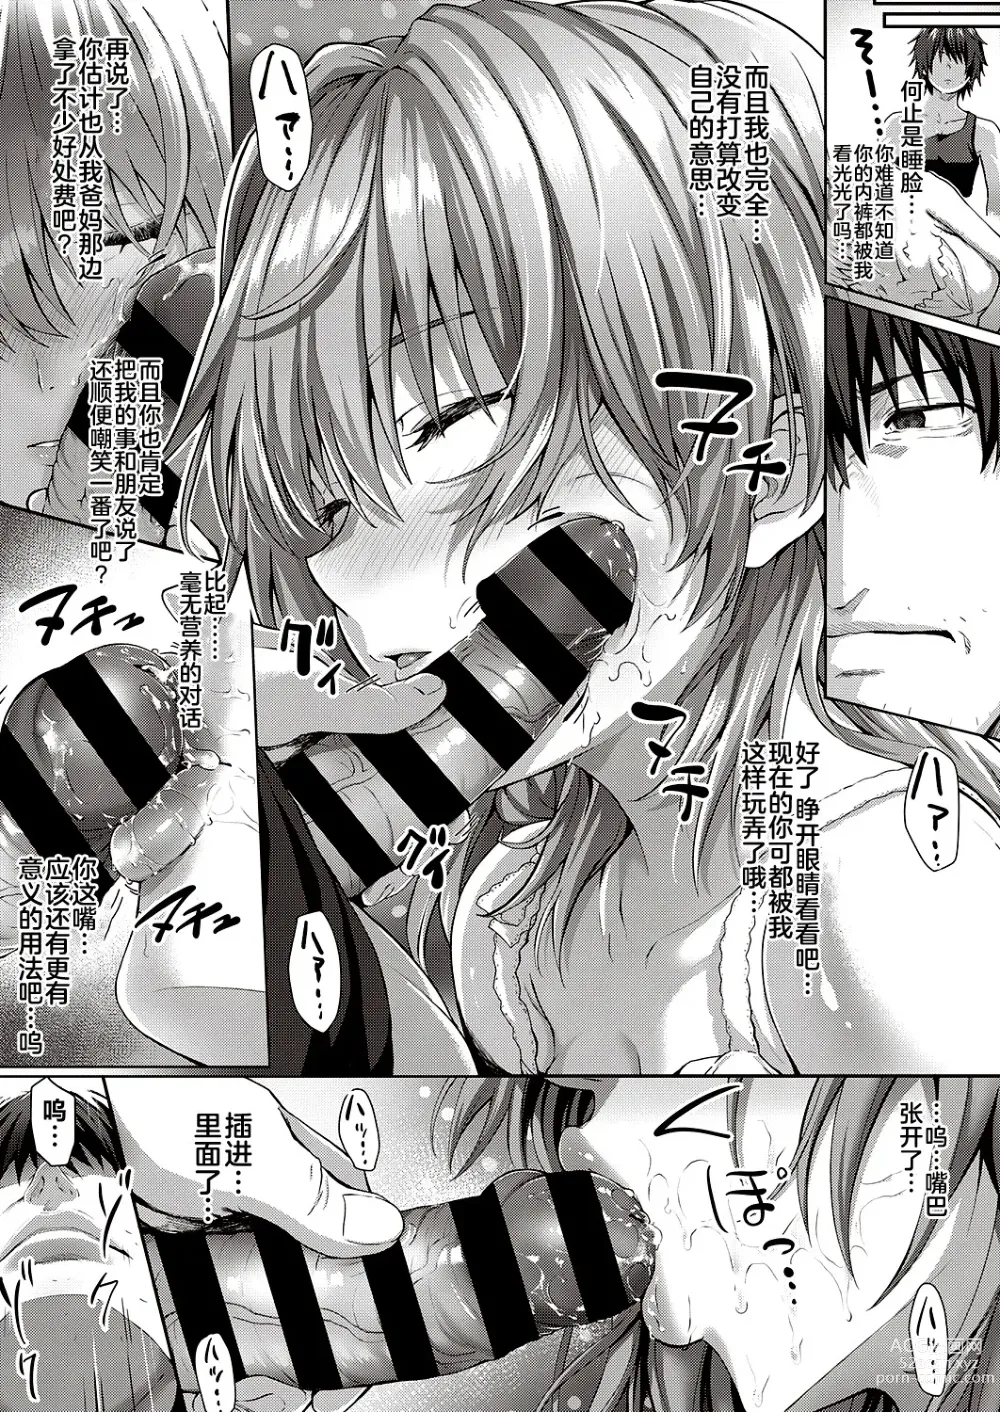 Page 13 of manga Koharu Attack